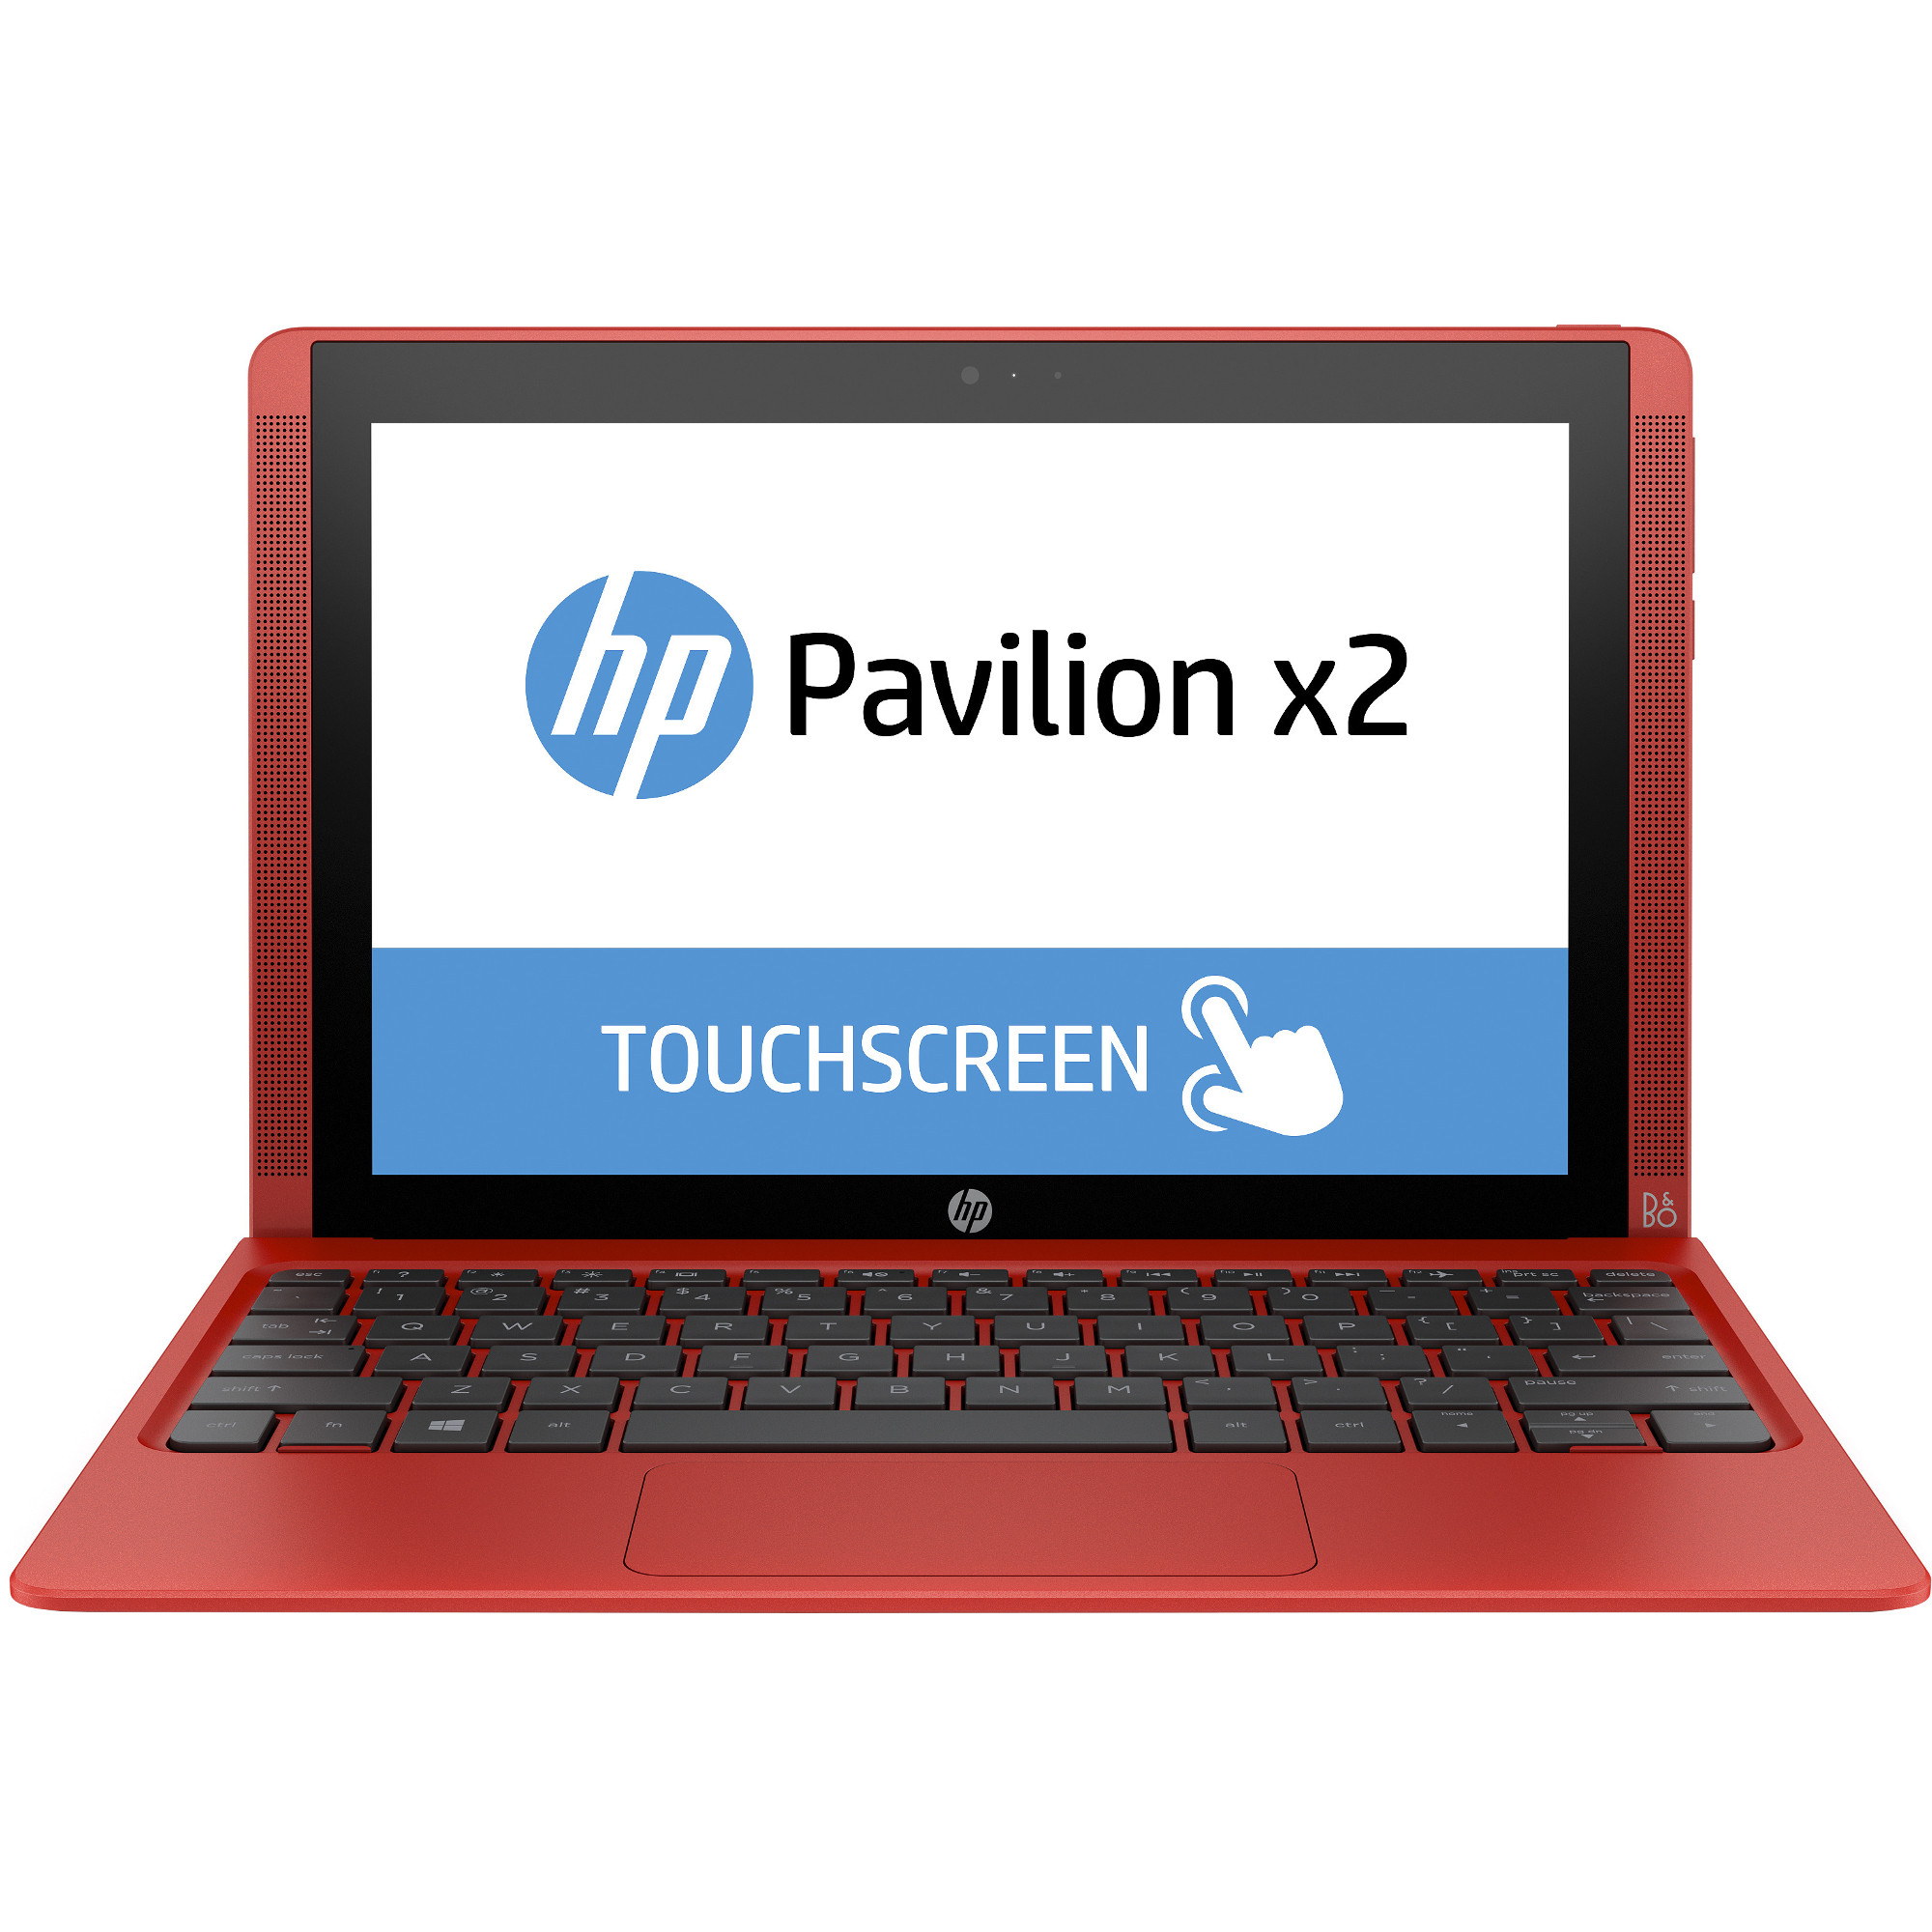  Laptop 2 in 1 HP Pavilion x2, Intel Atom Z8300, 2GB DDR3, eMMC 32GB + HDD 500GB, Intel HD Graphics, Windows 10 Home 